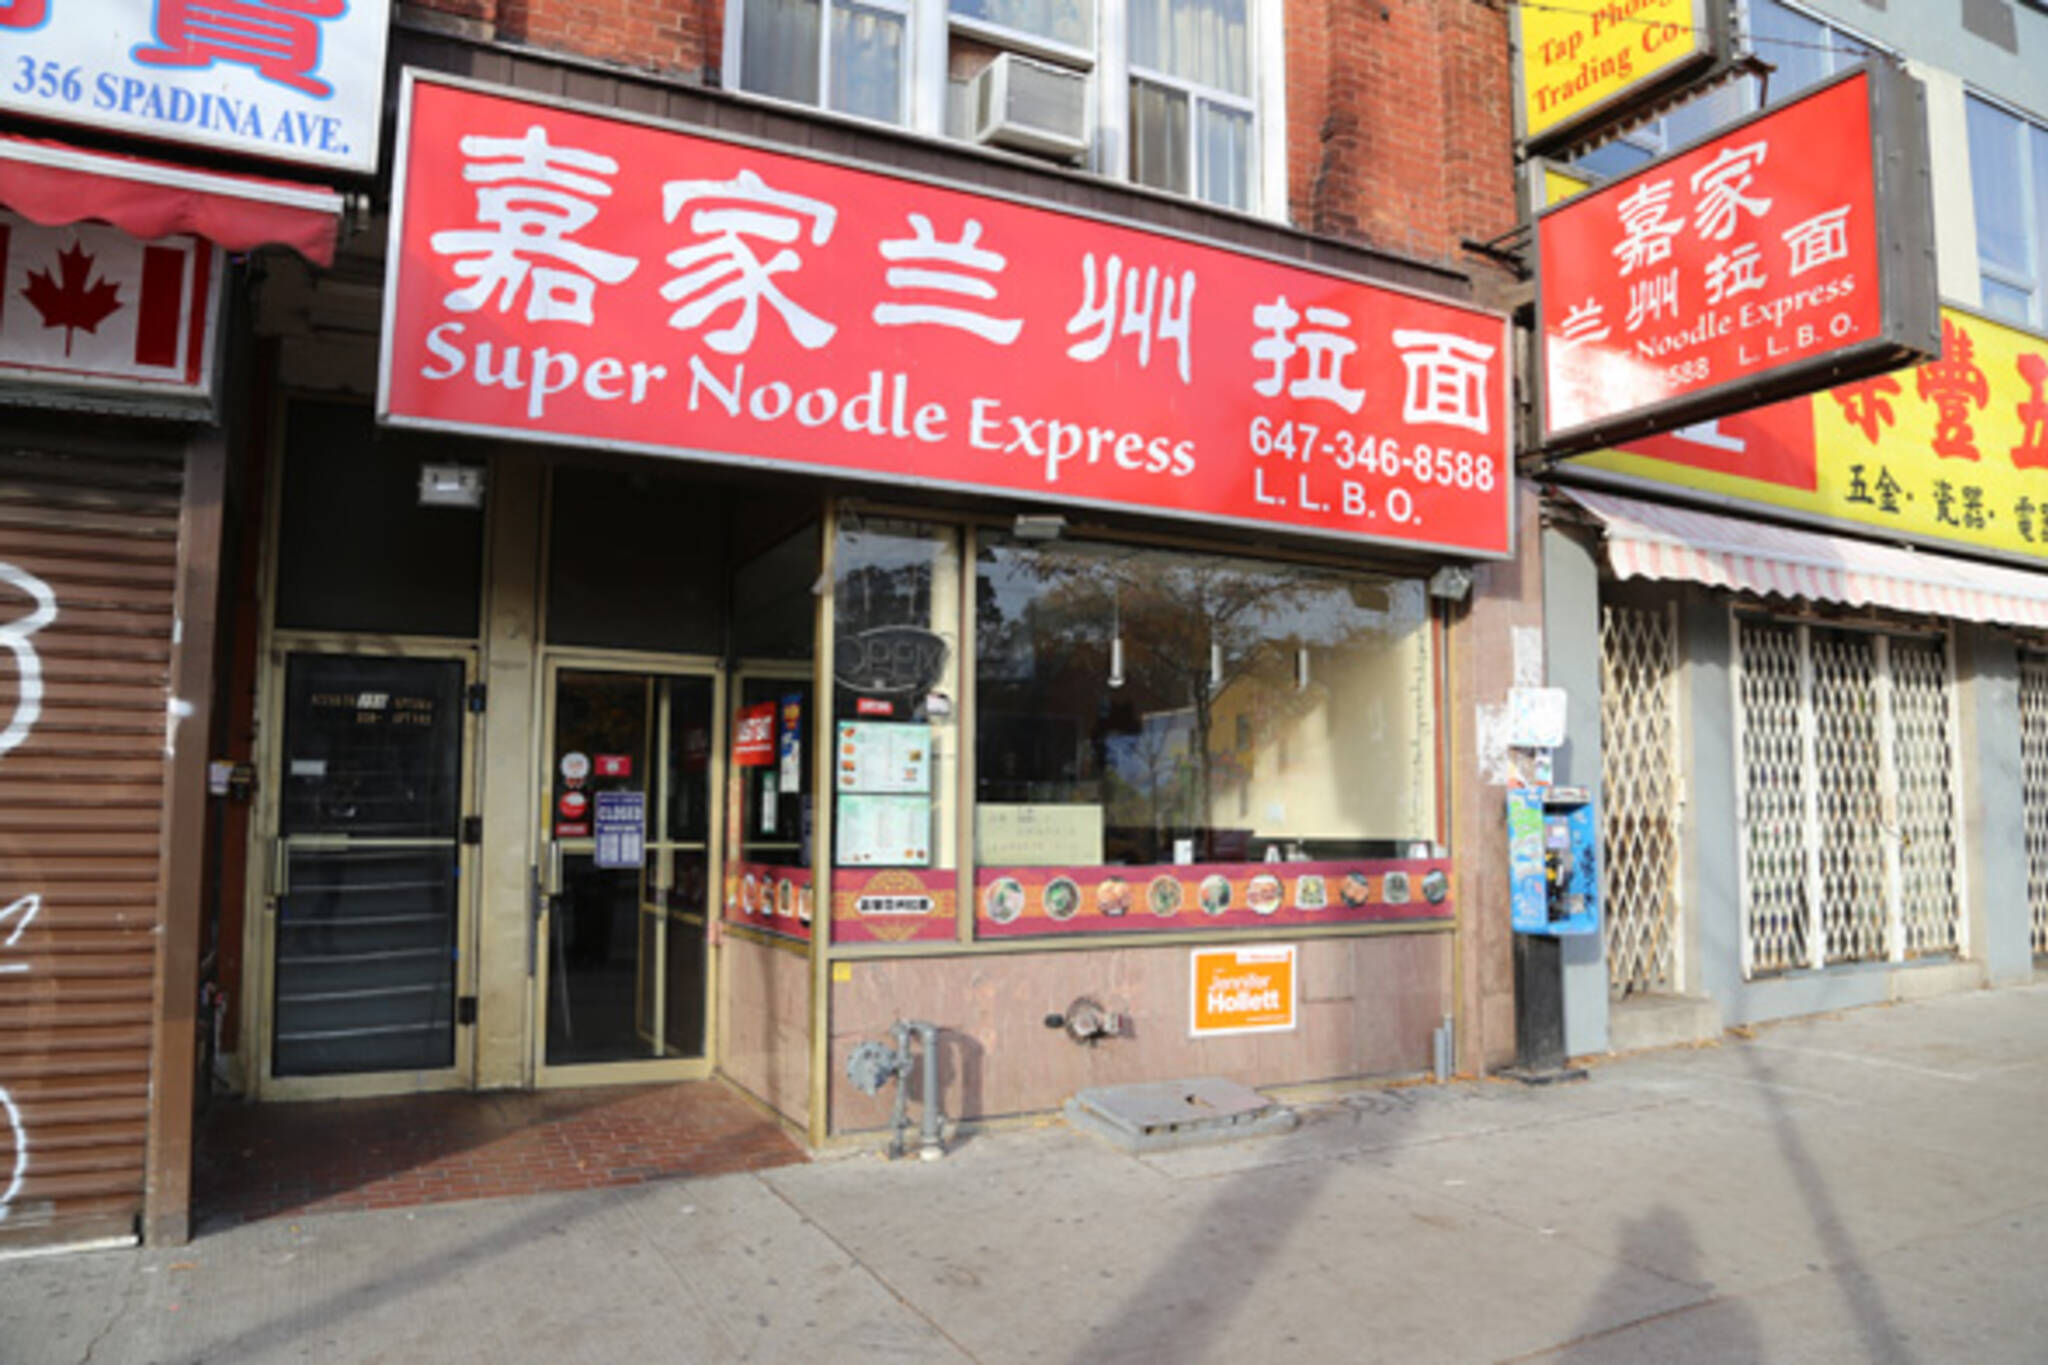 Super Noodle Express